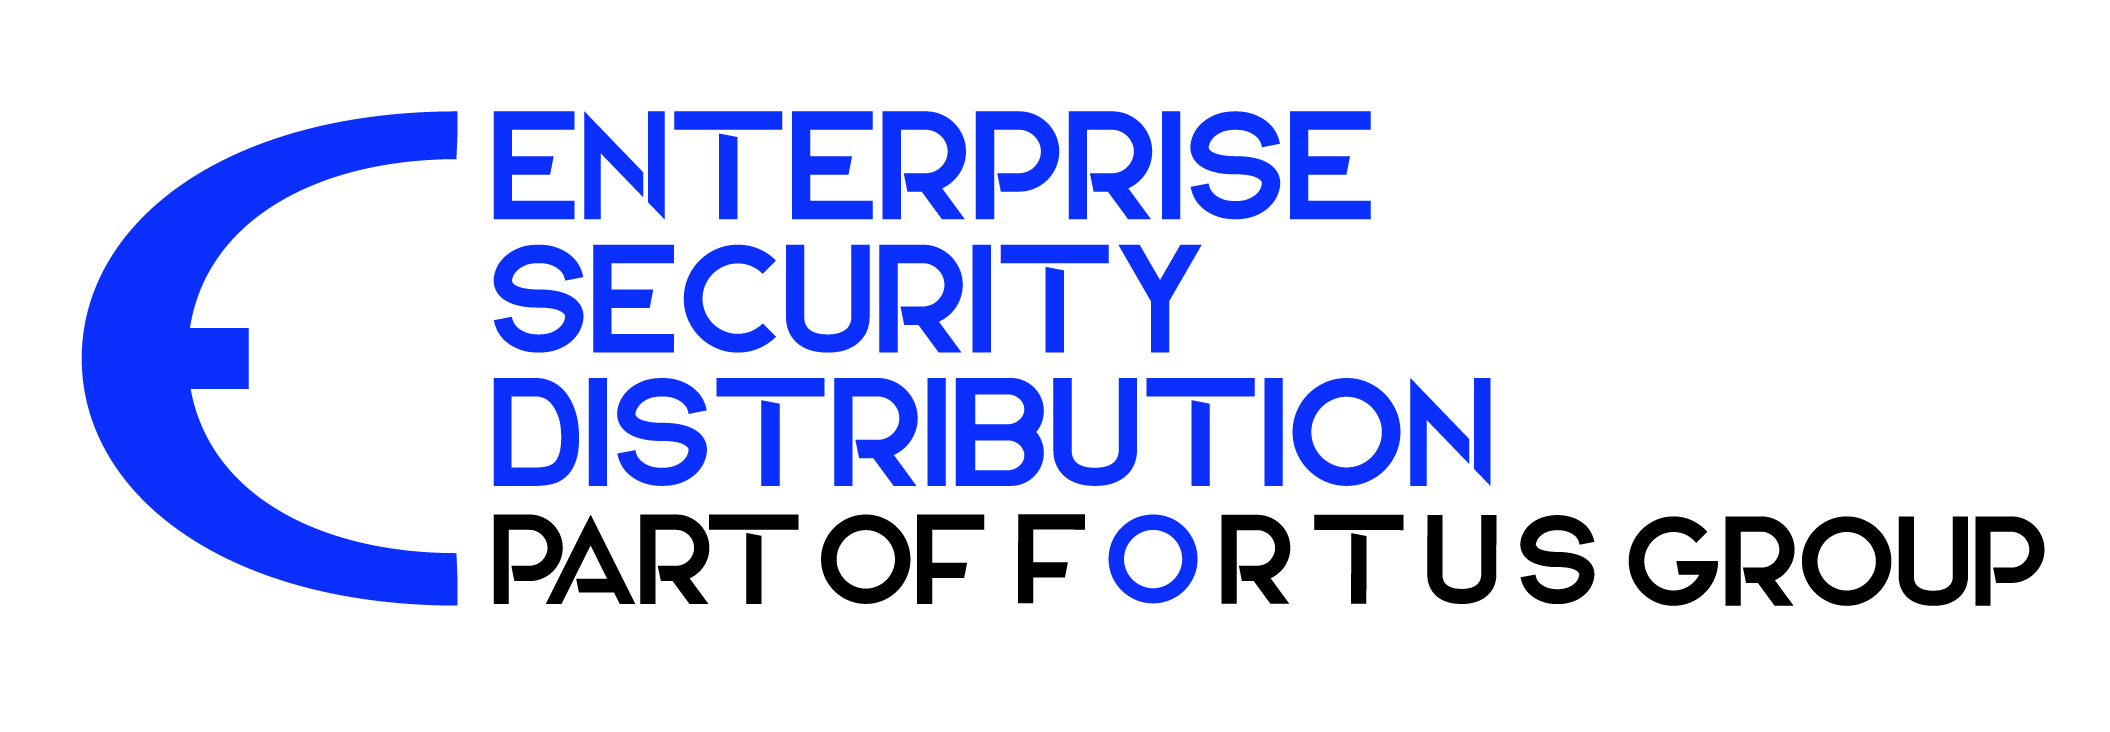 Enterprise Security Distribution